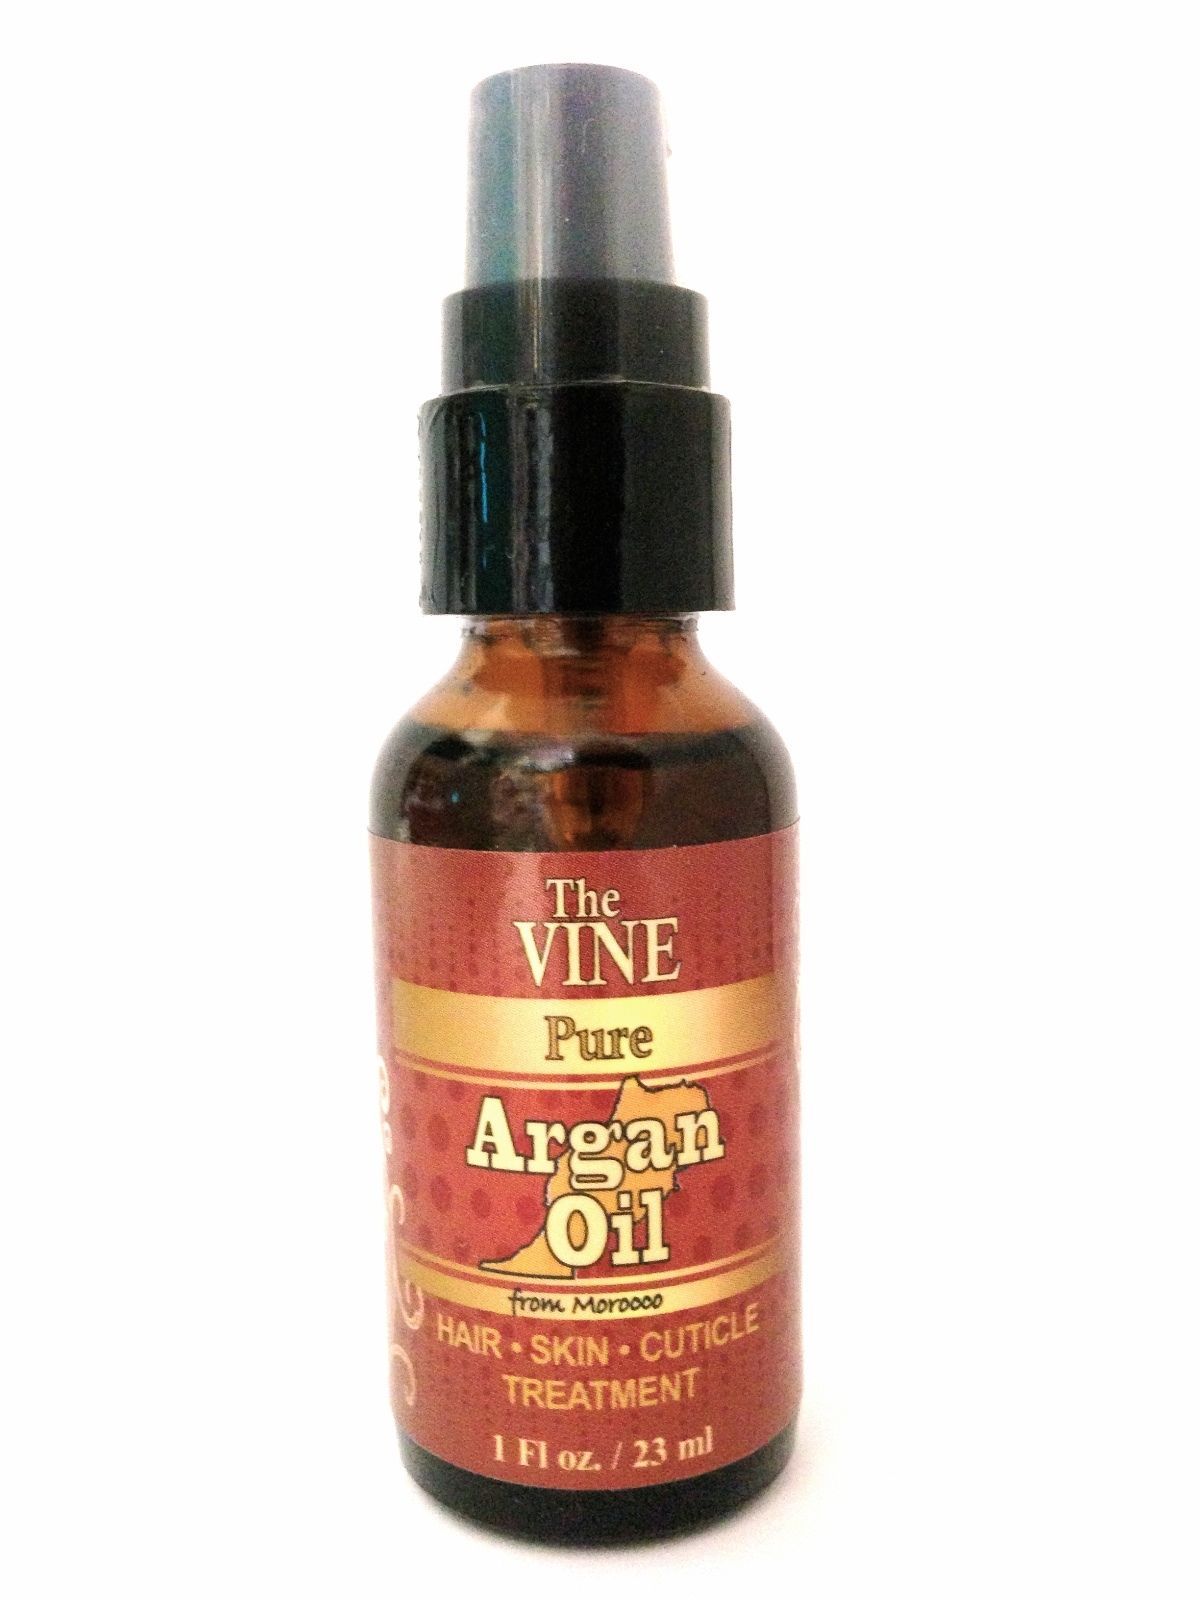 THE VINE PURE ARGAN OIL FROM MOROCCO HAIR SKIN CUTICLE TREATMENT 1OZ - $11.99